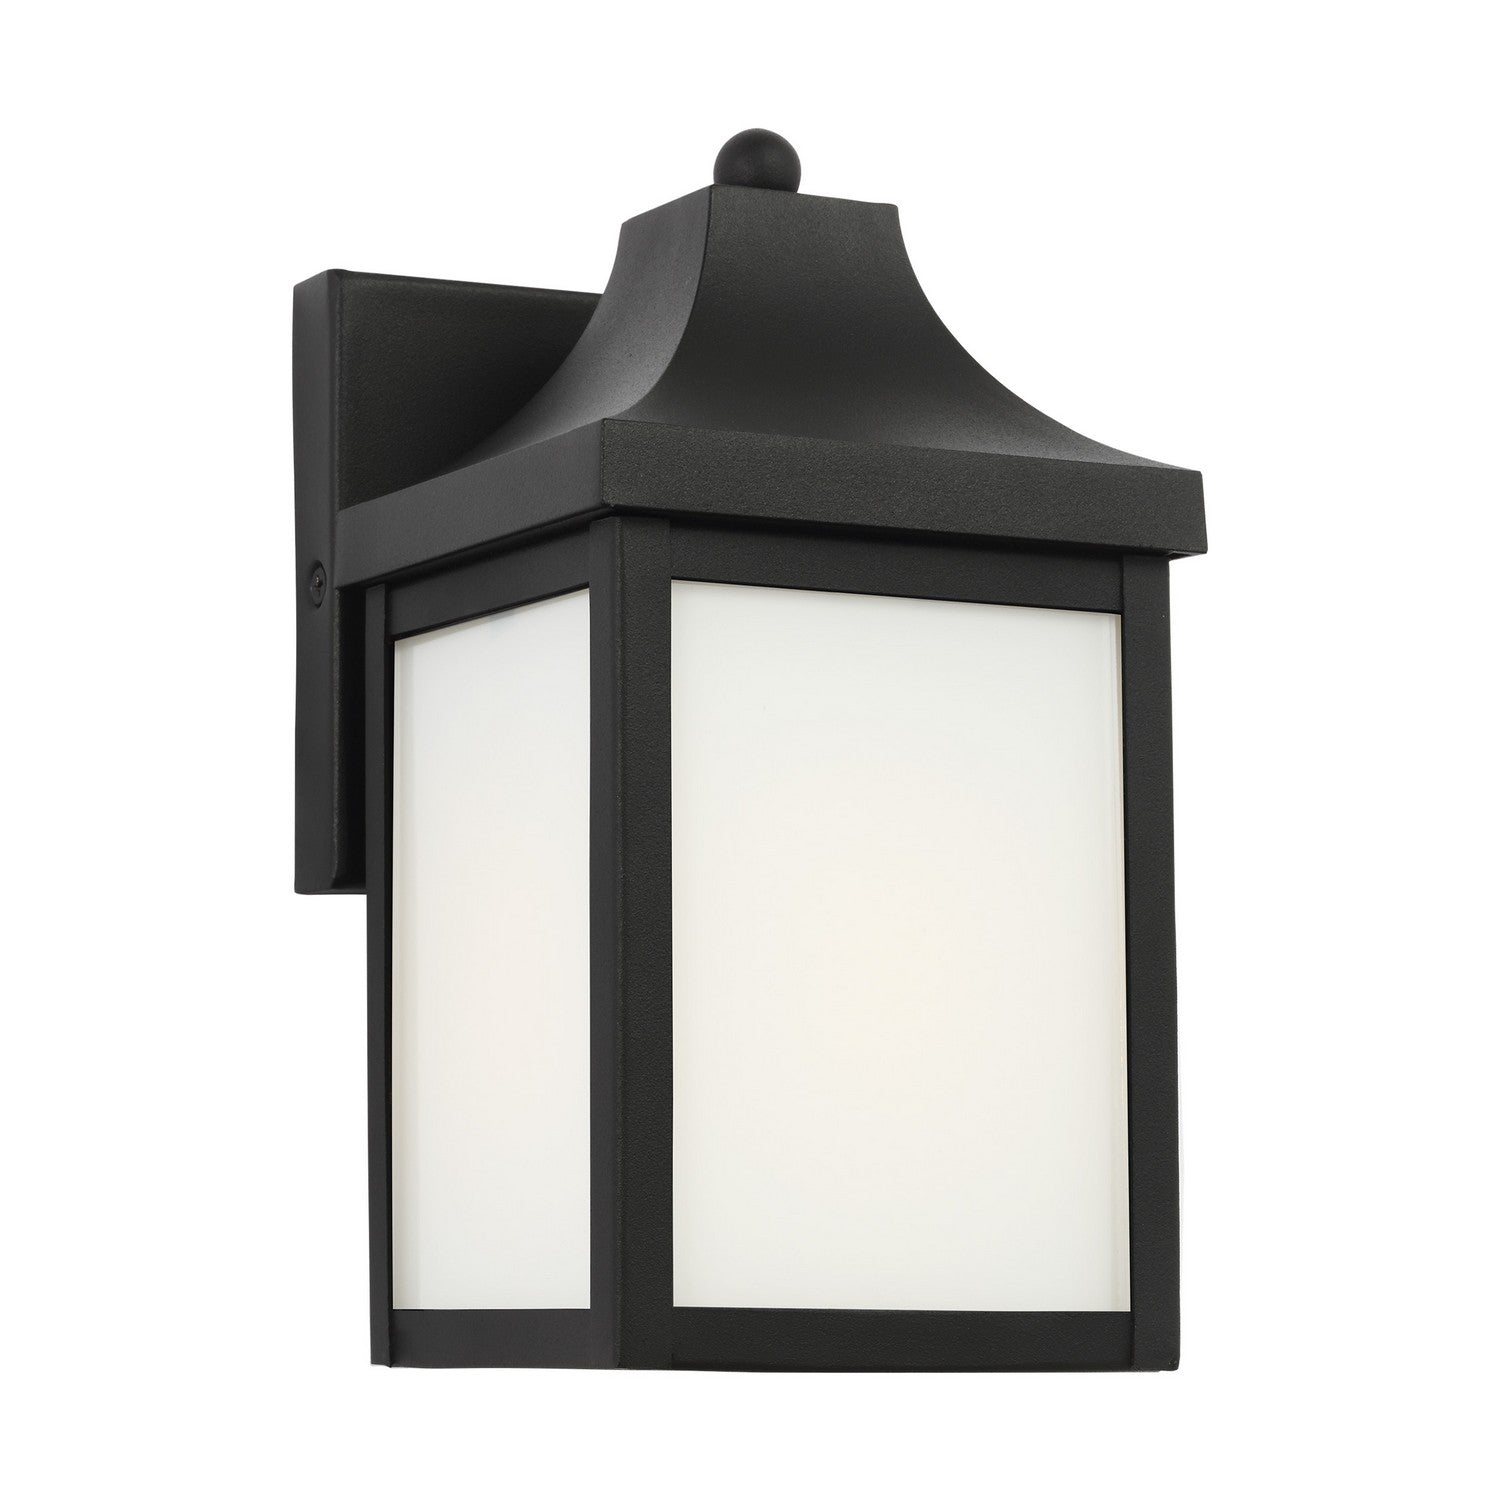 Generation Lighting Canada. - One Light Outdoor Lantern - Saybrook - Textured Black- Union Lighting Luminaires Decor